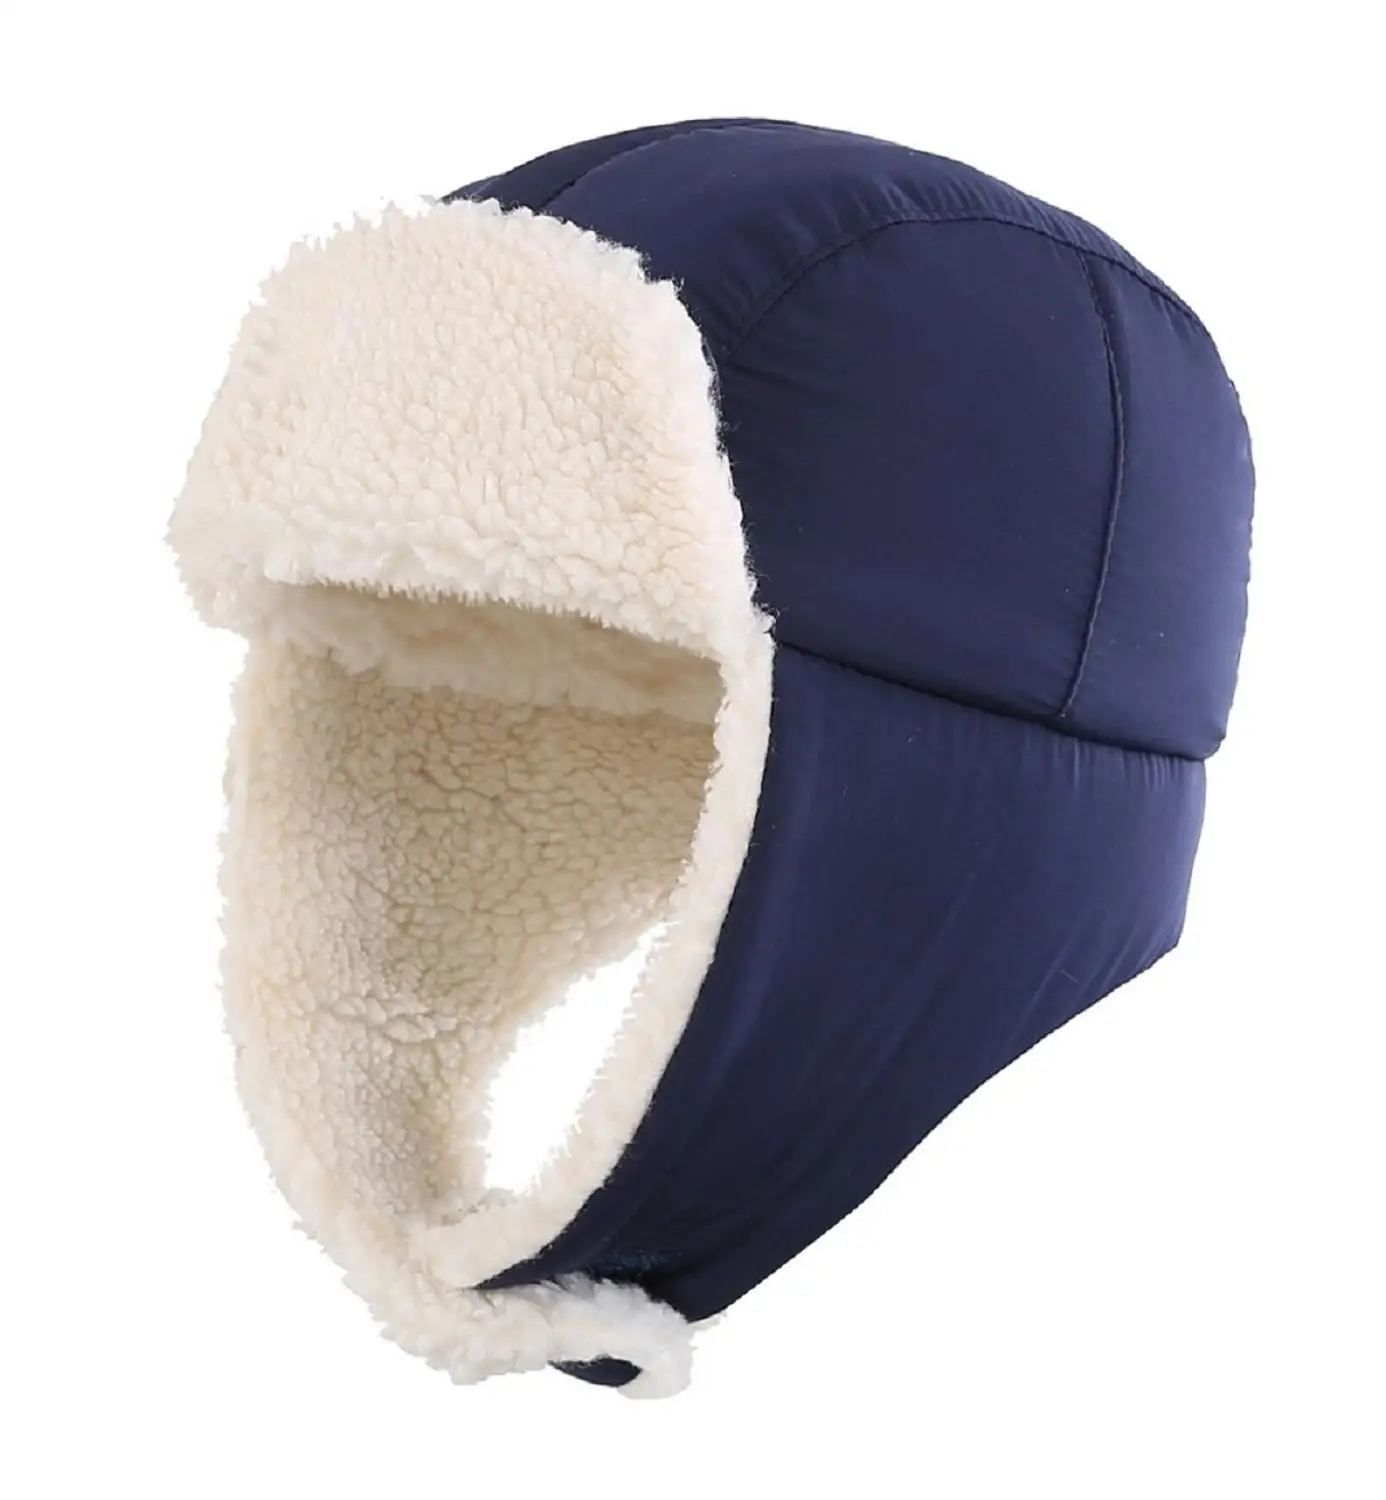 Connectyle Toddler Boys Girls Skull Hat Soft Sherpa Lined Earflap Adjustable Kids Windproof Warm Winter Cap Snow Ski Hat